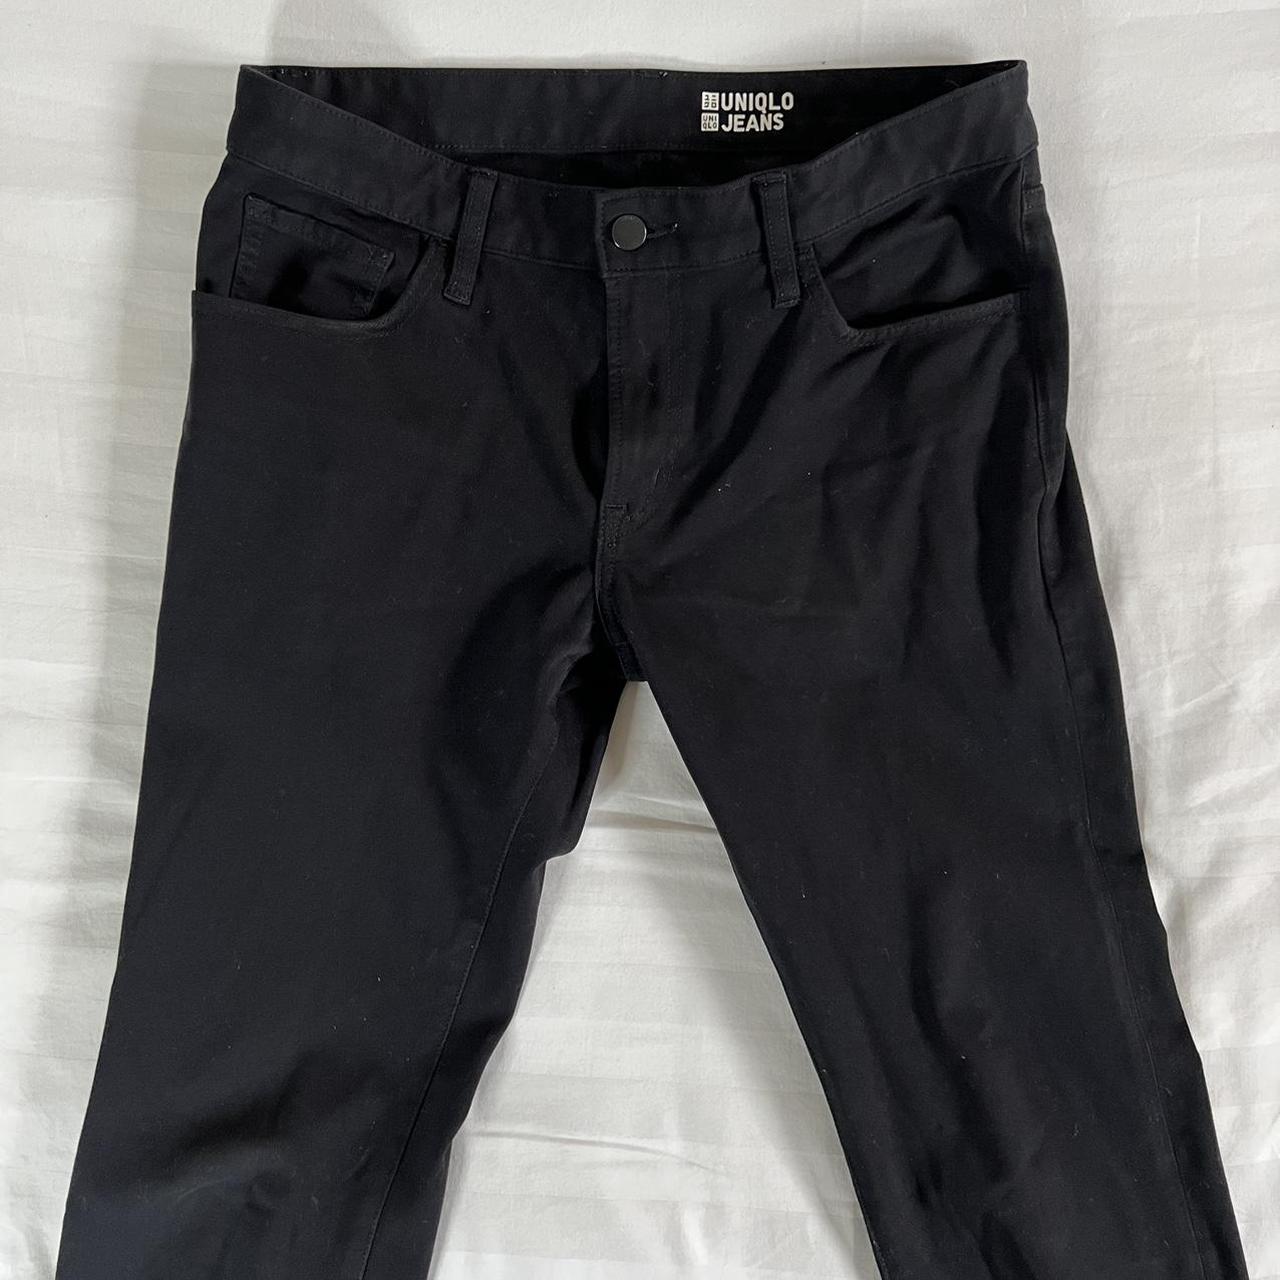 Black Uniqlo jeans in slim straight fit Good... - Depop